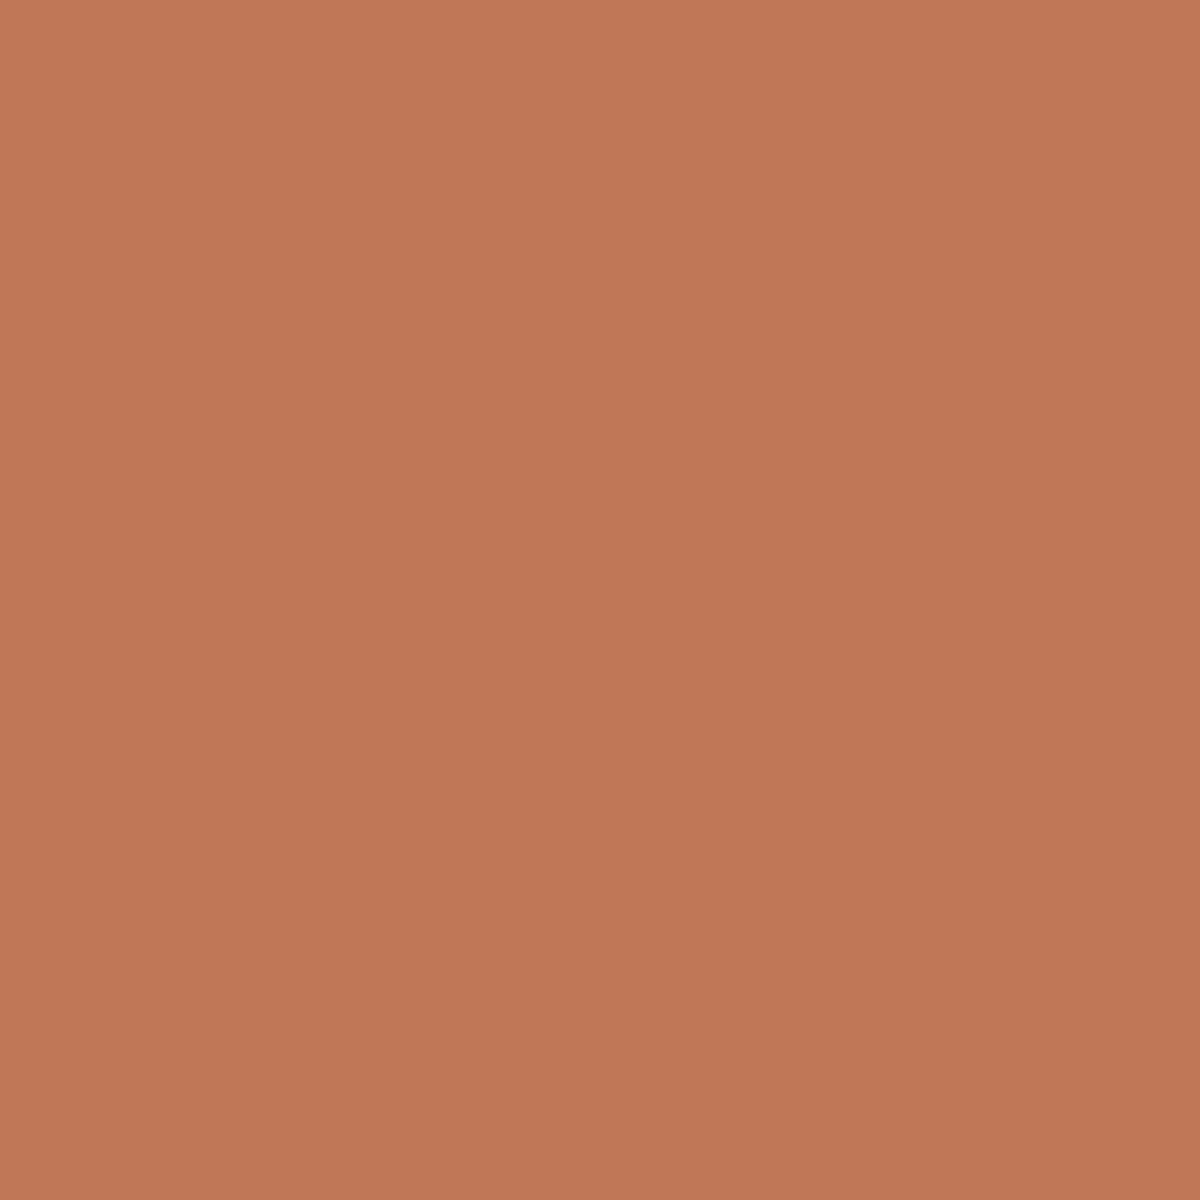  Swatch of warm tan blush loose powder bronzer displaying its color